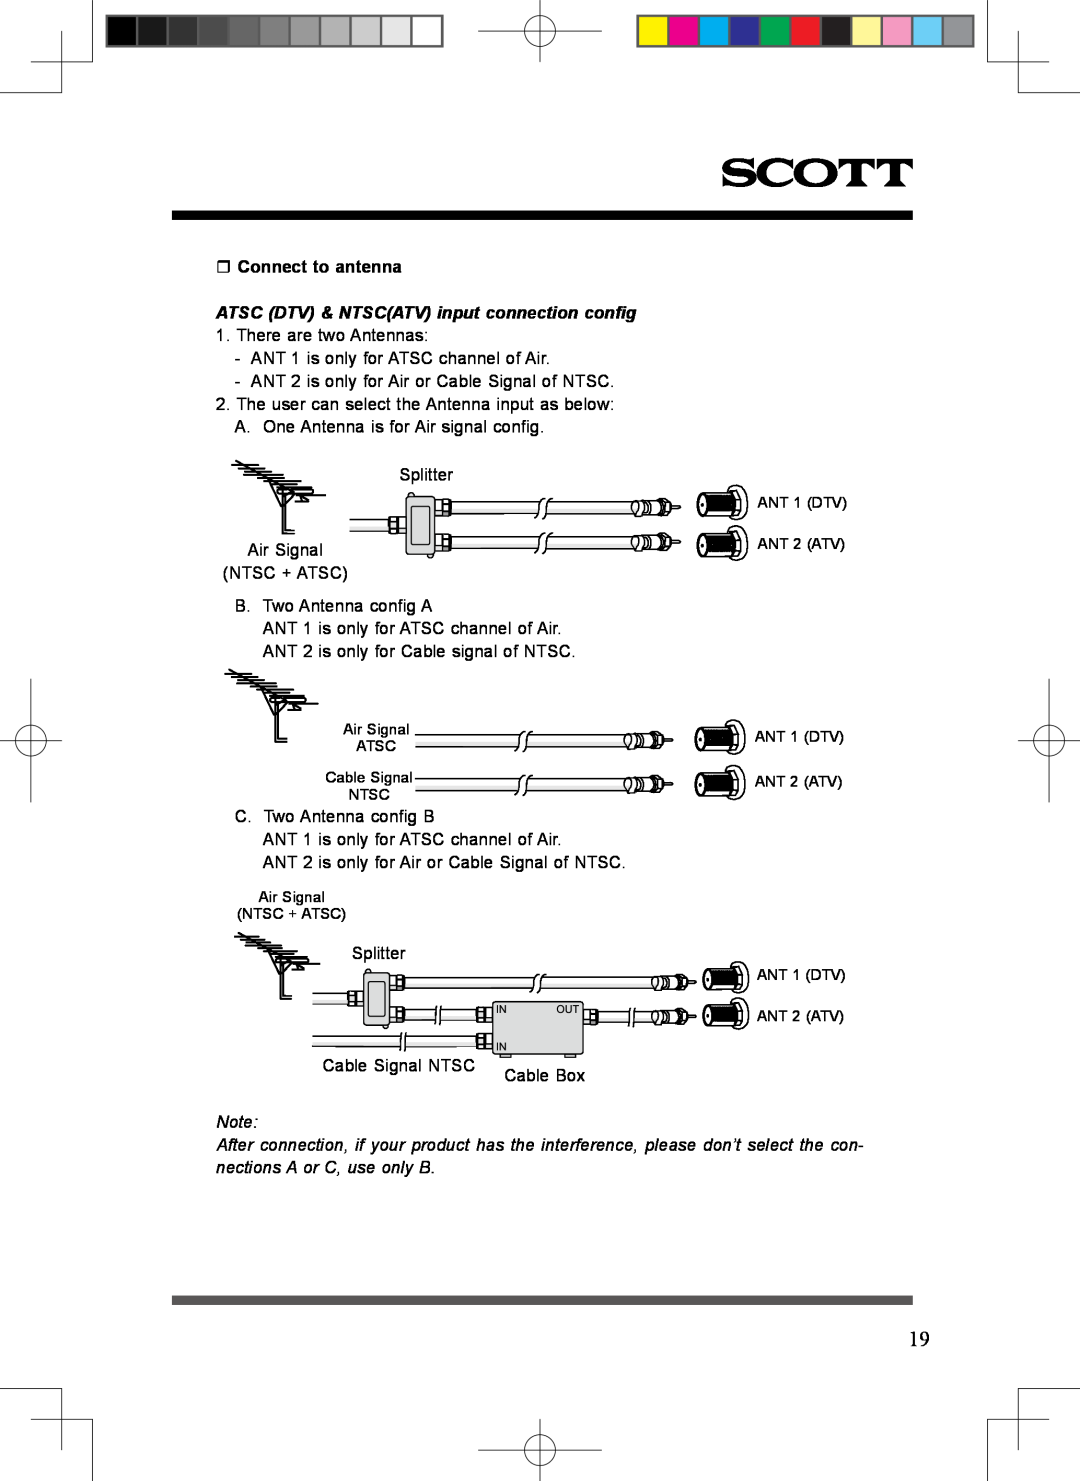 Scott LCT37SHA manual  Connect to antenna, ATSC DTV & NTSCATV input connection config 